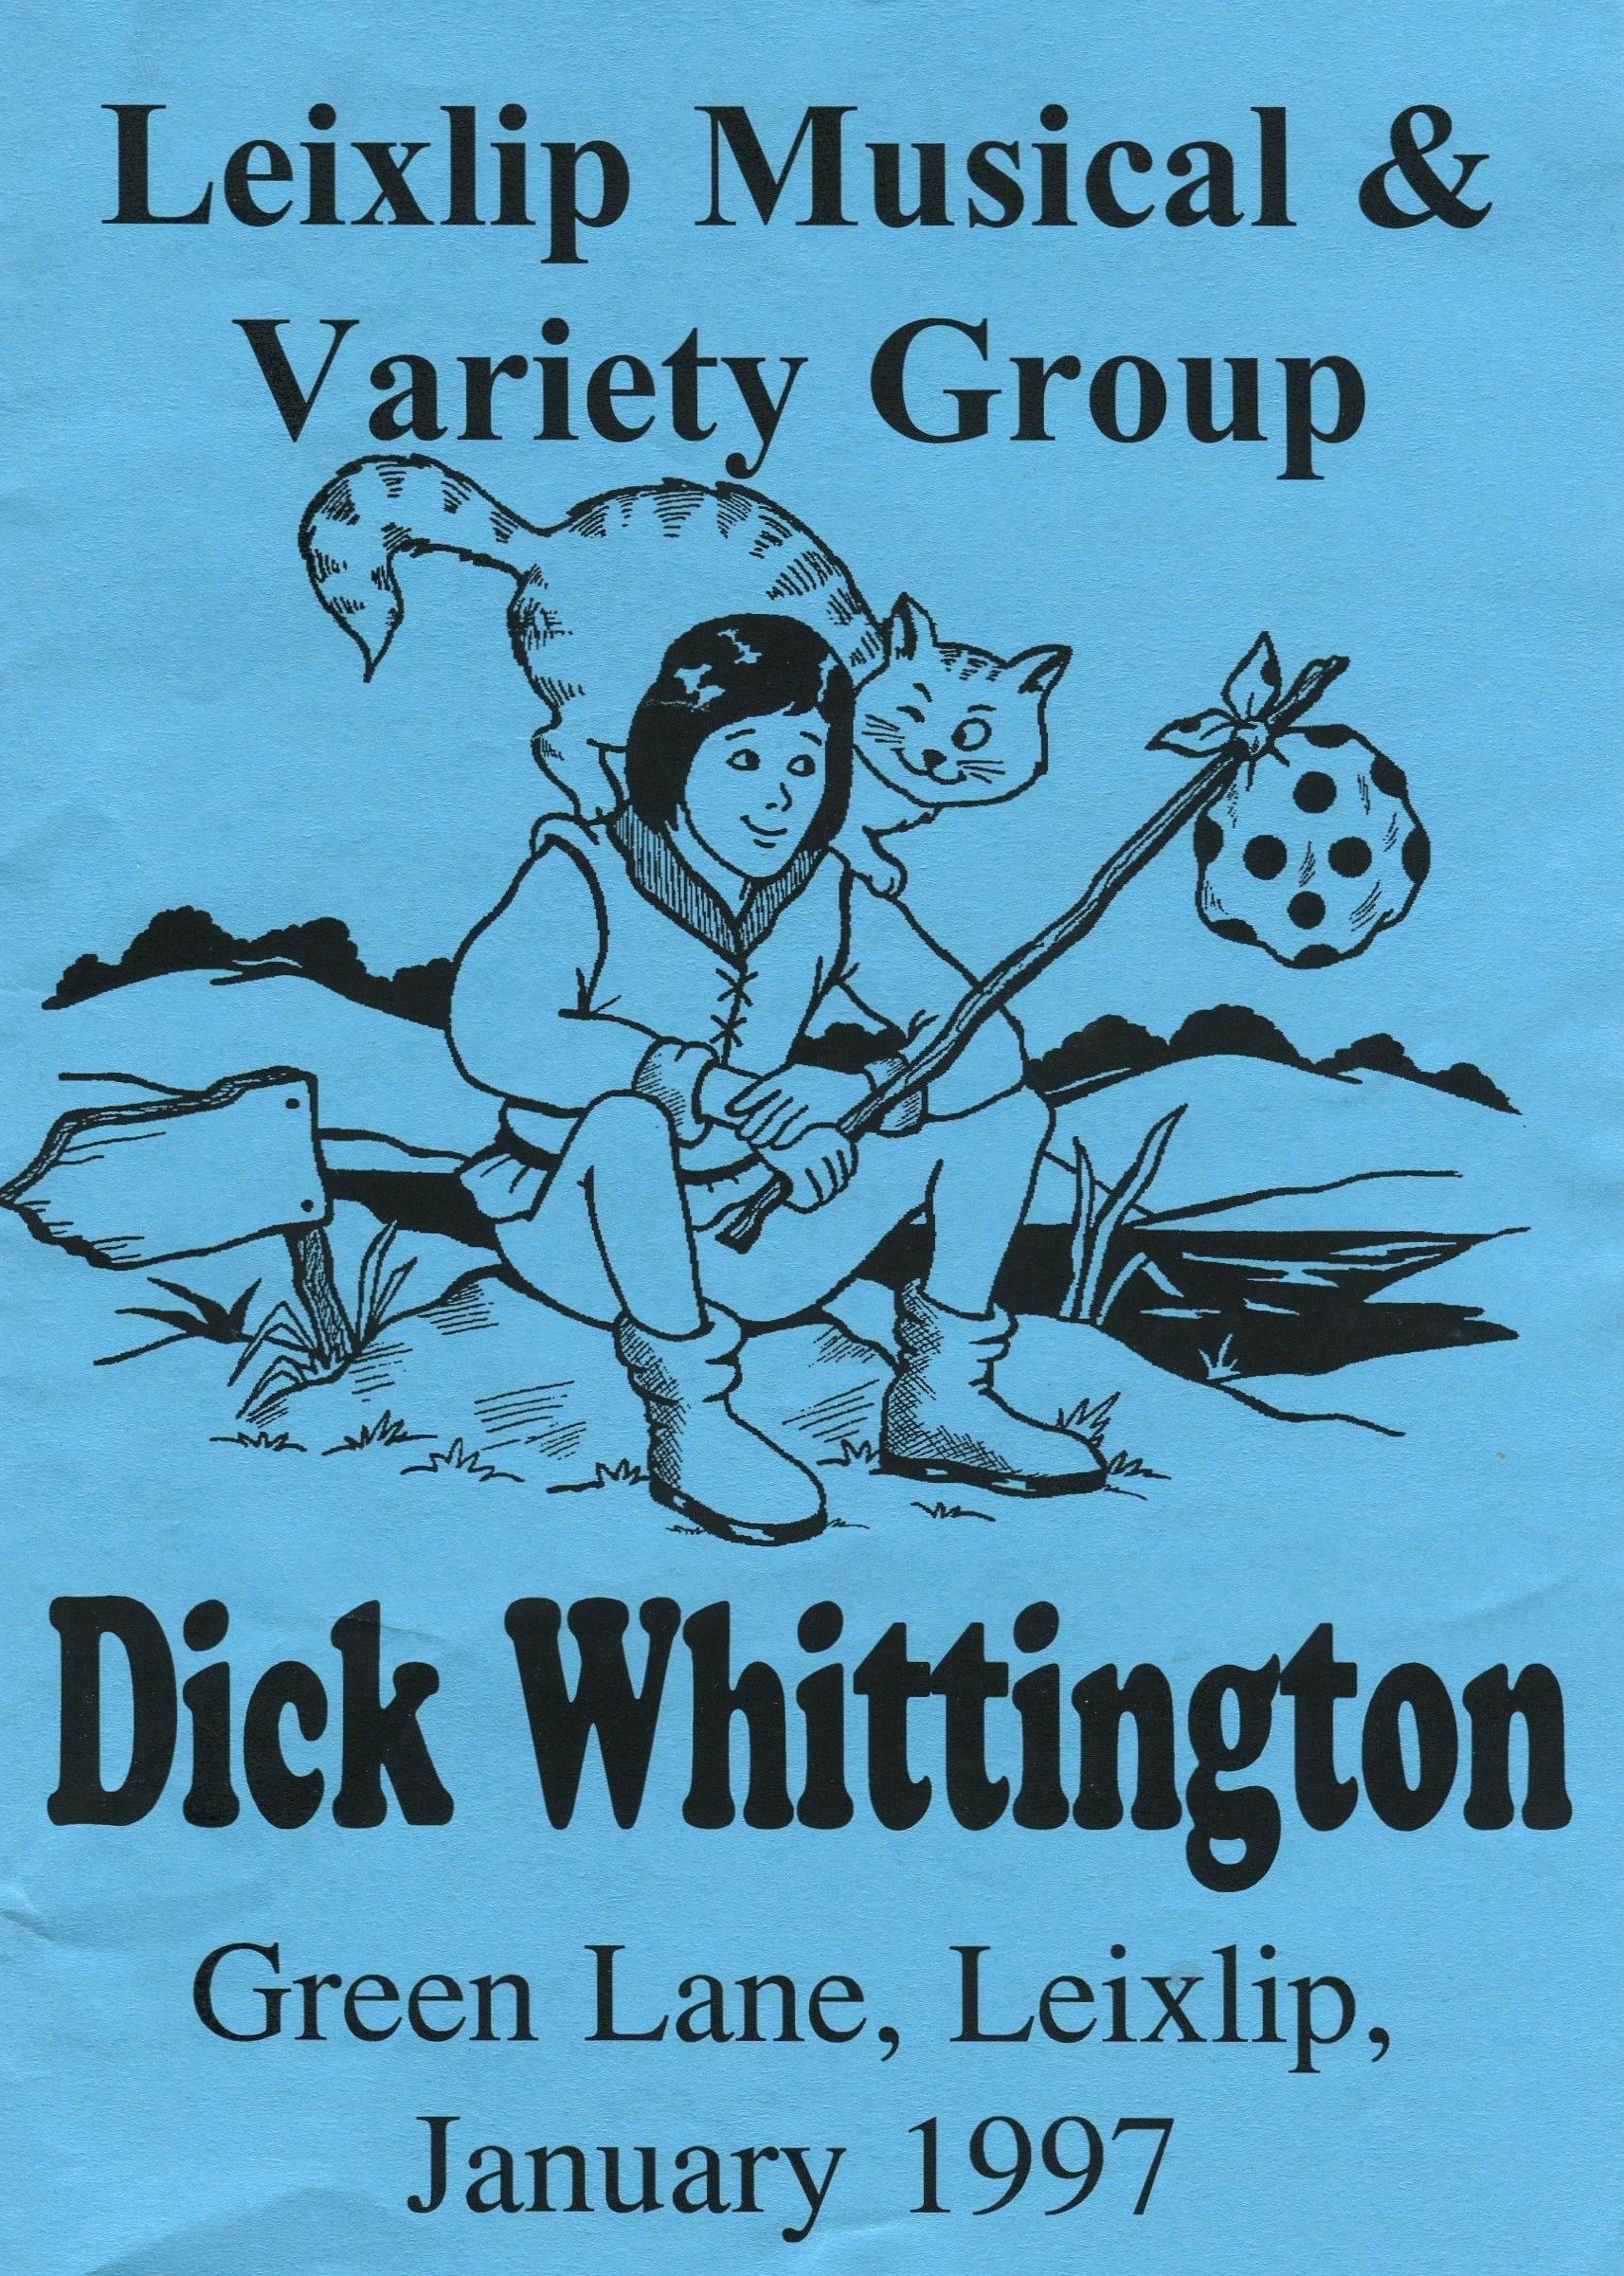 Dick Whittington 1997 (www.lmvg.ie)